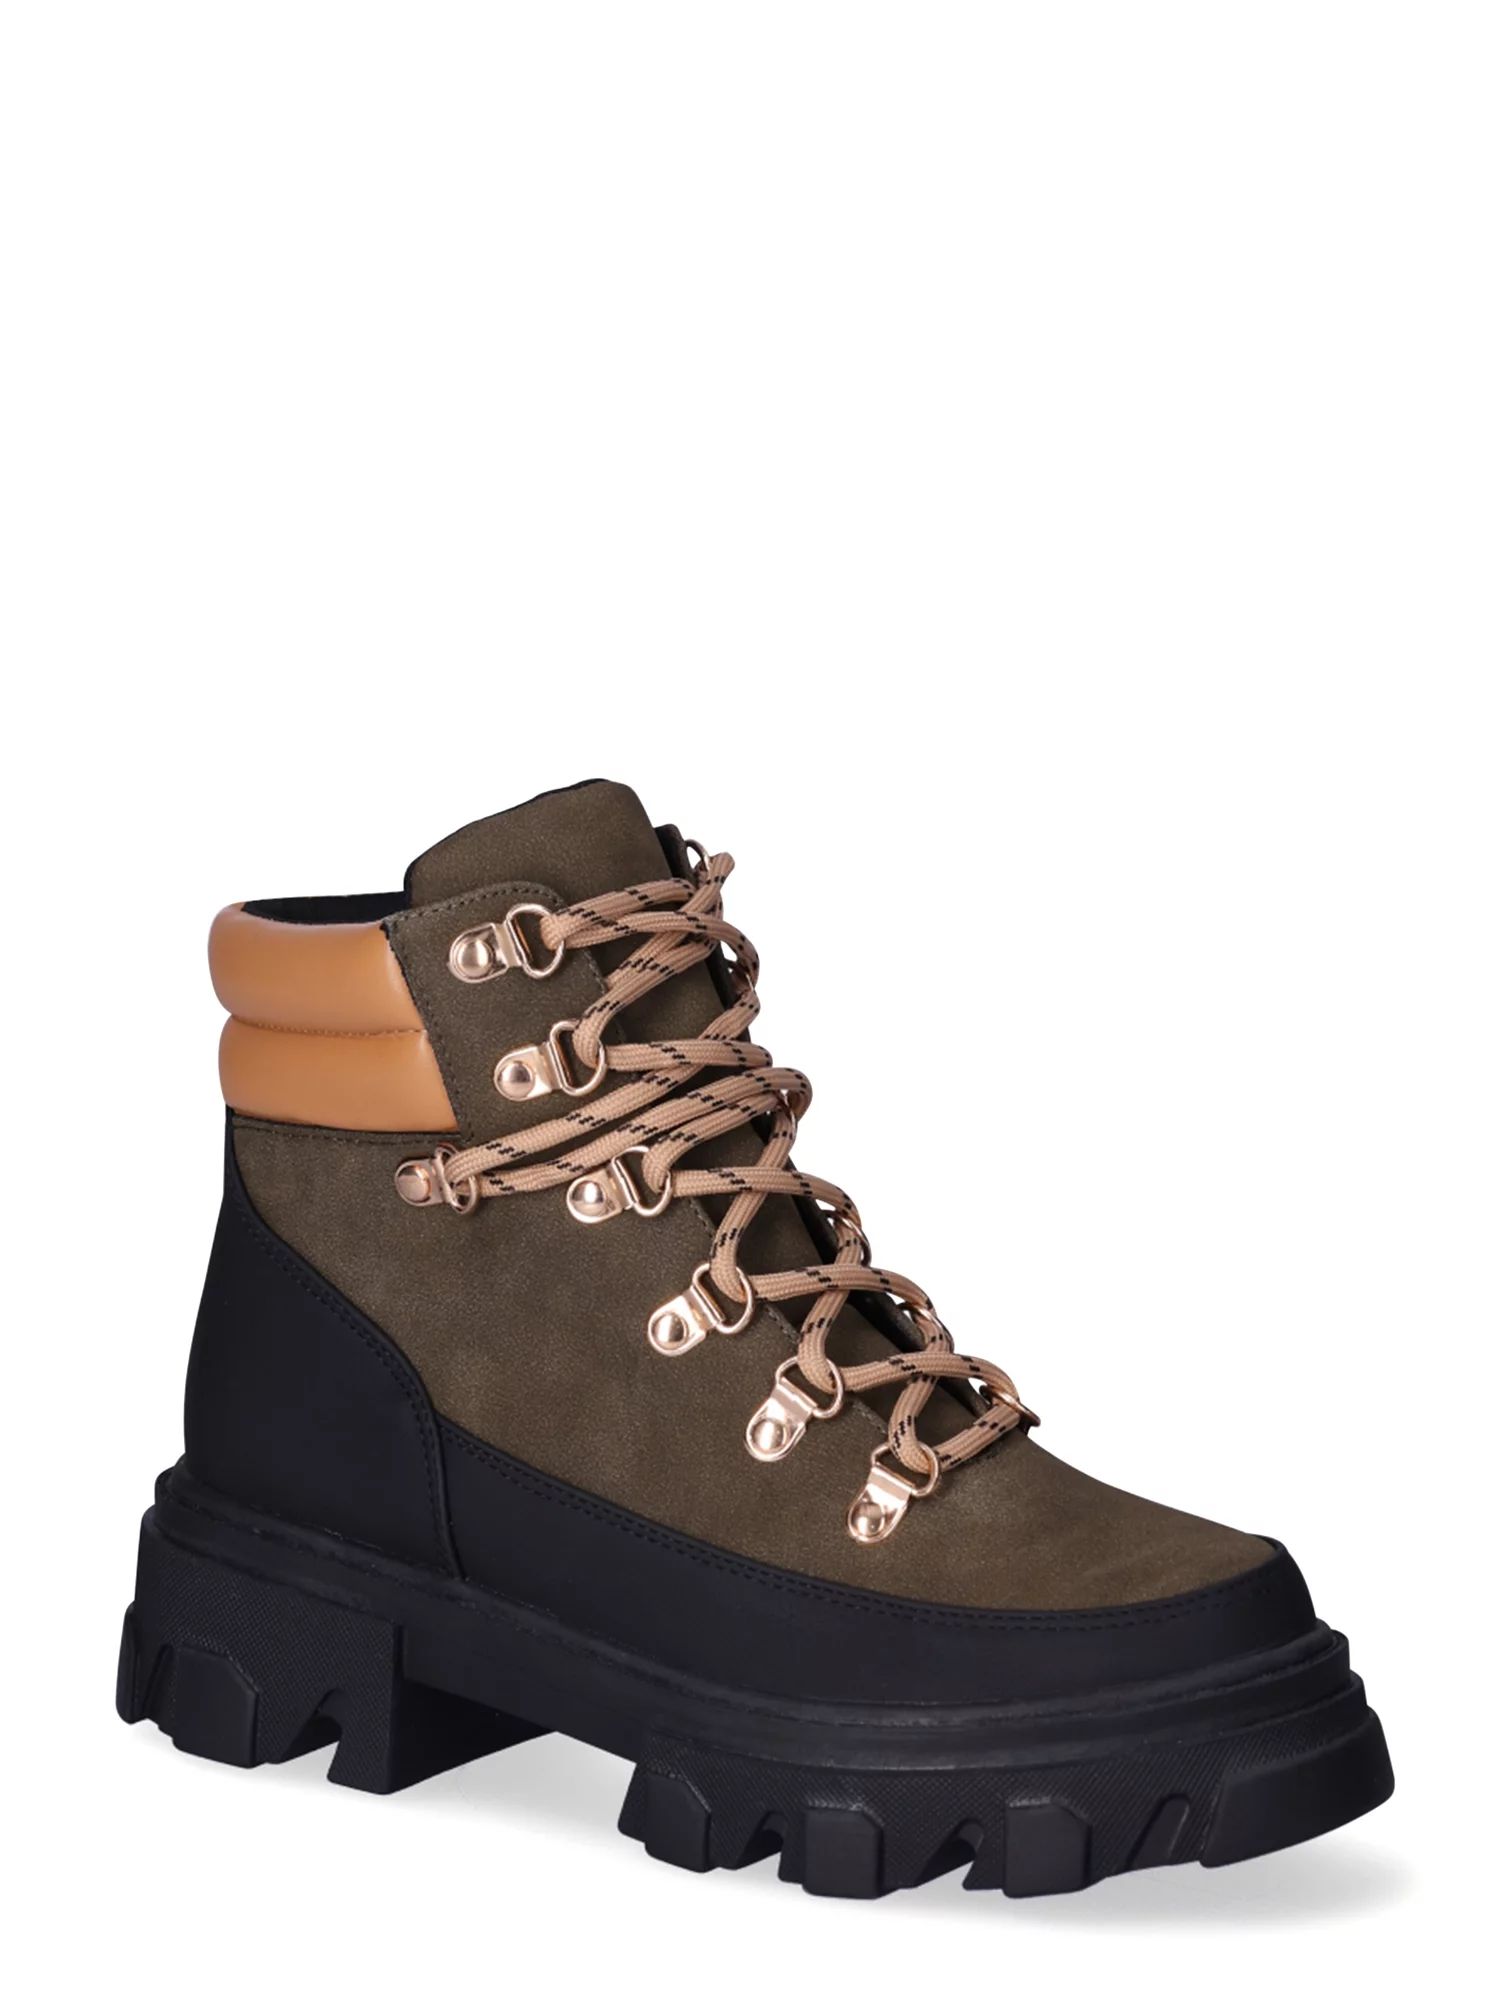 PORTLAND by Portland Boots Company Women's Lace Up Hiker Boots | Walmart (US)